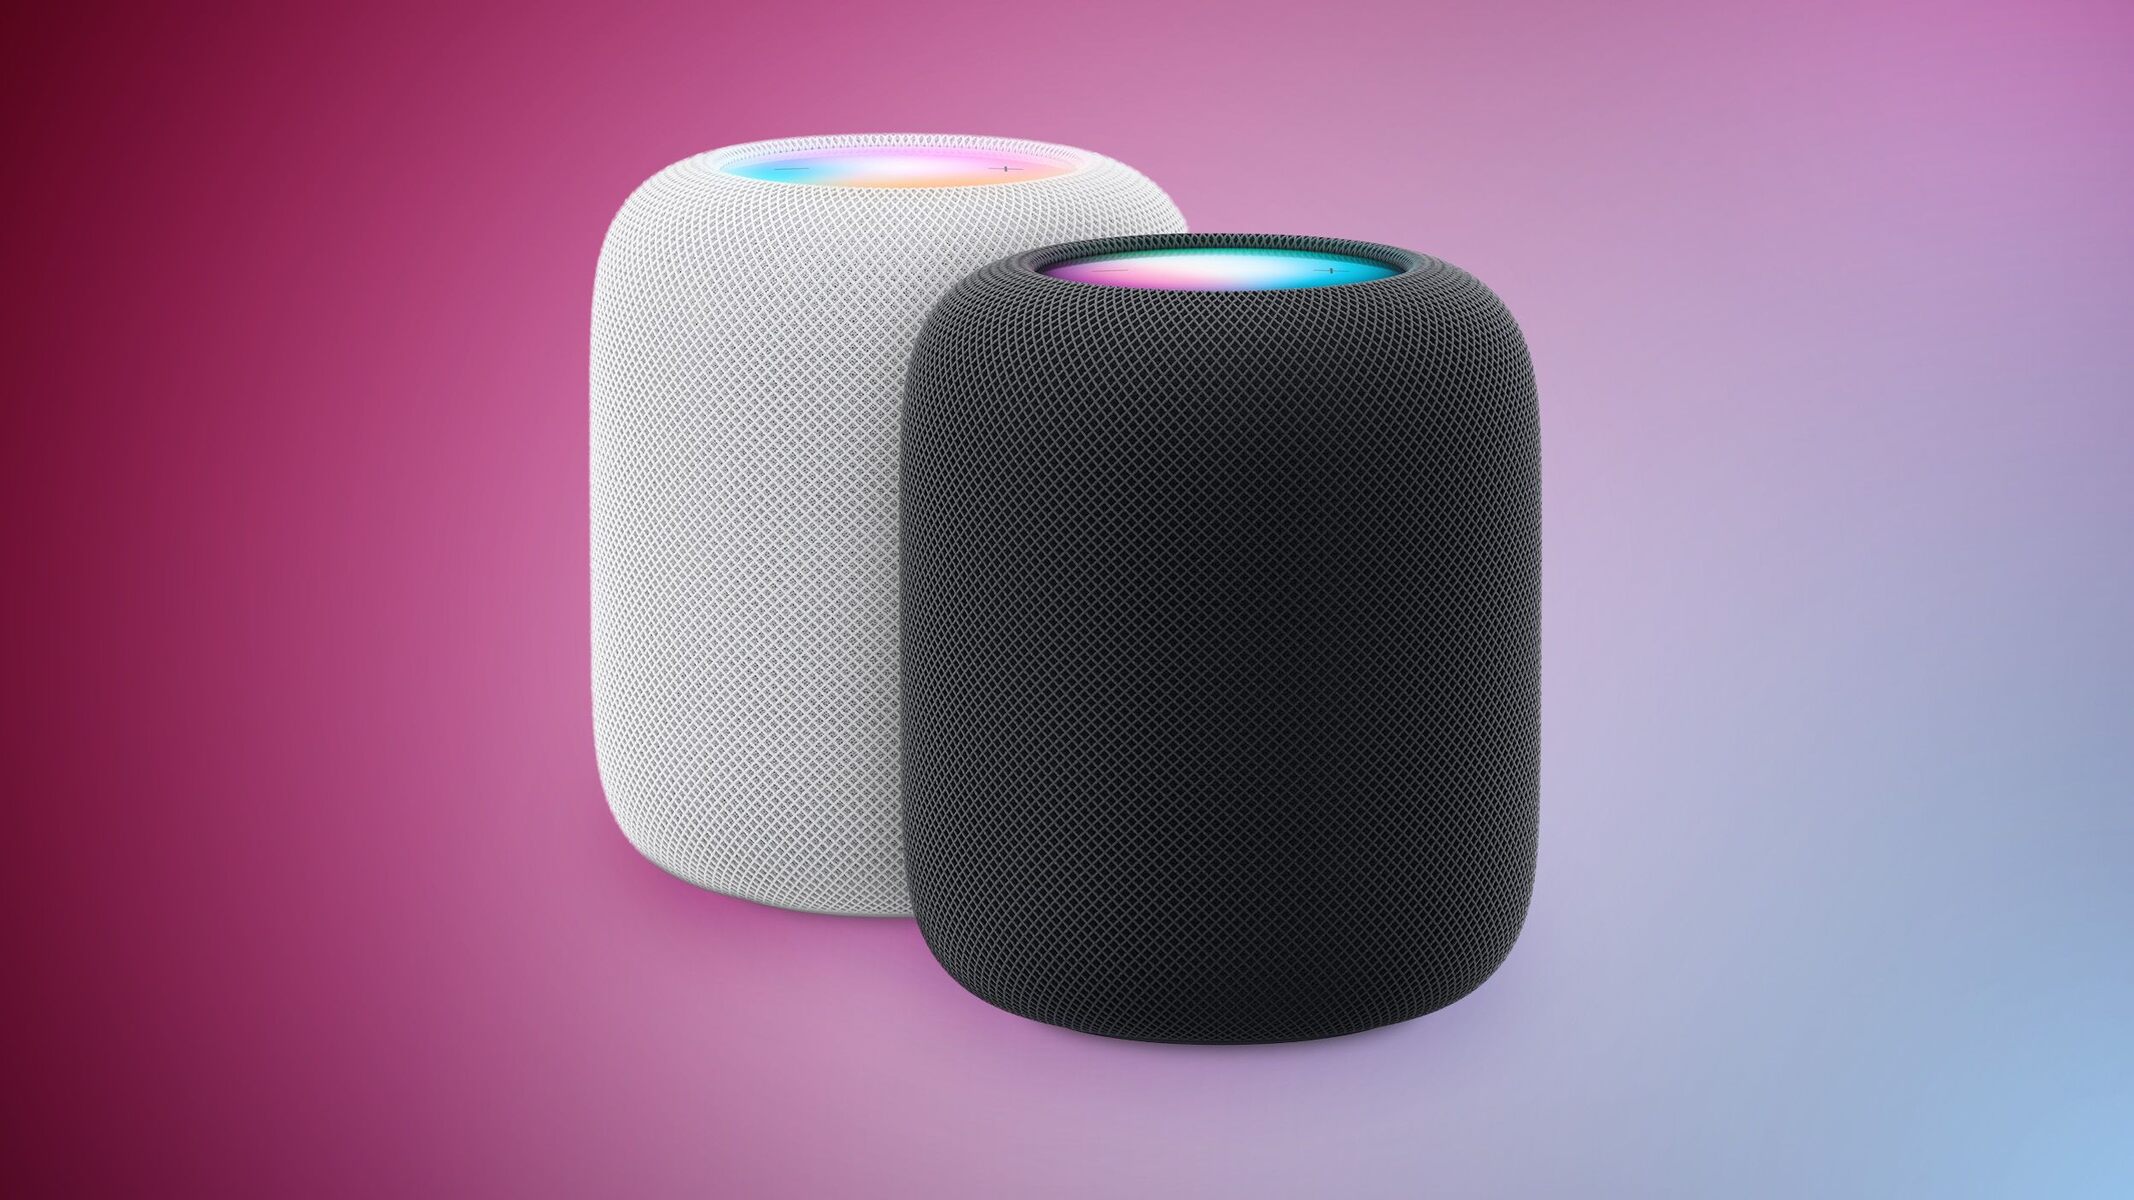 What Is Apple’s Smart Speaker